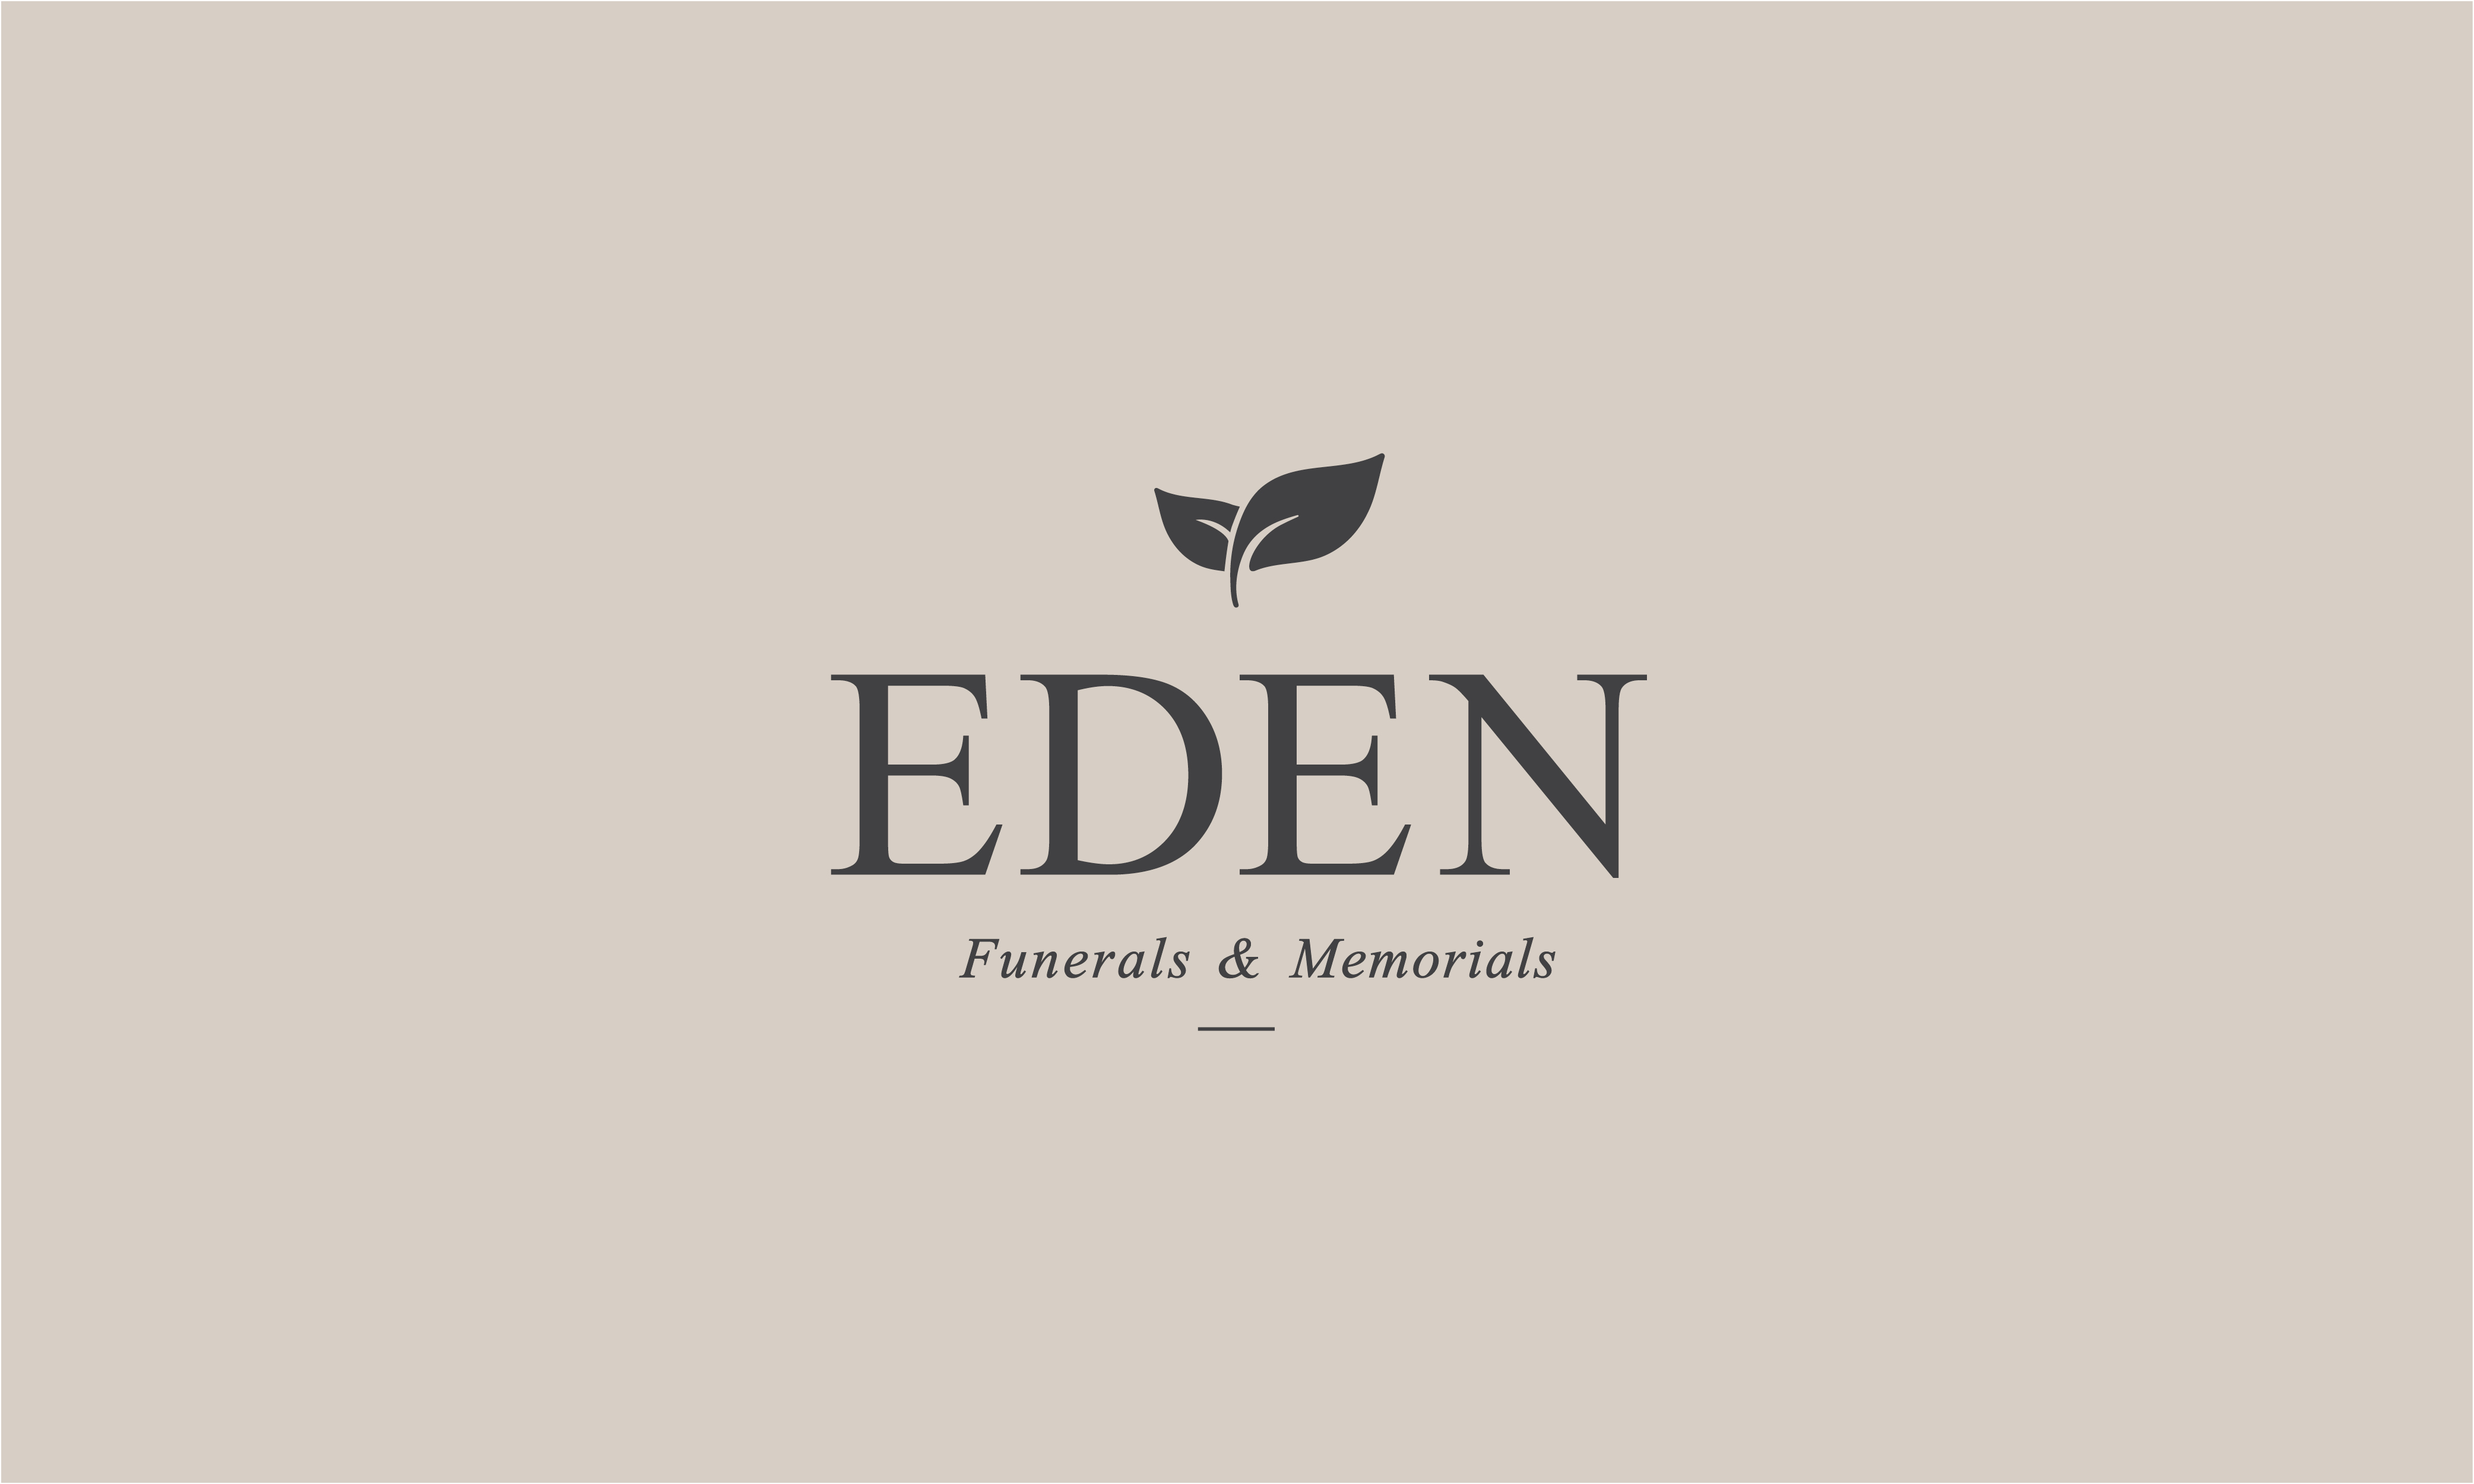 logo design for funerals & memorials service Eden